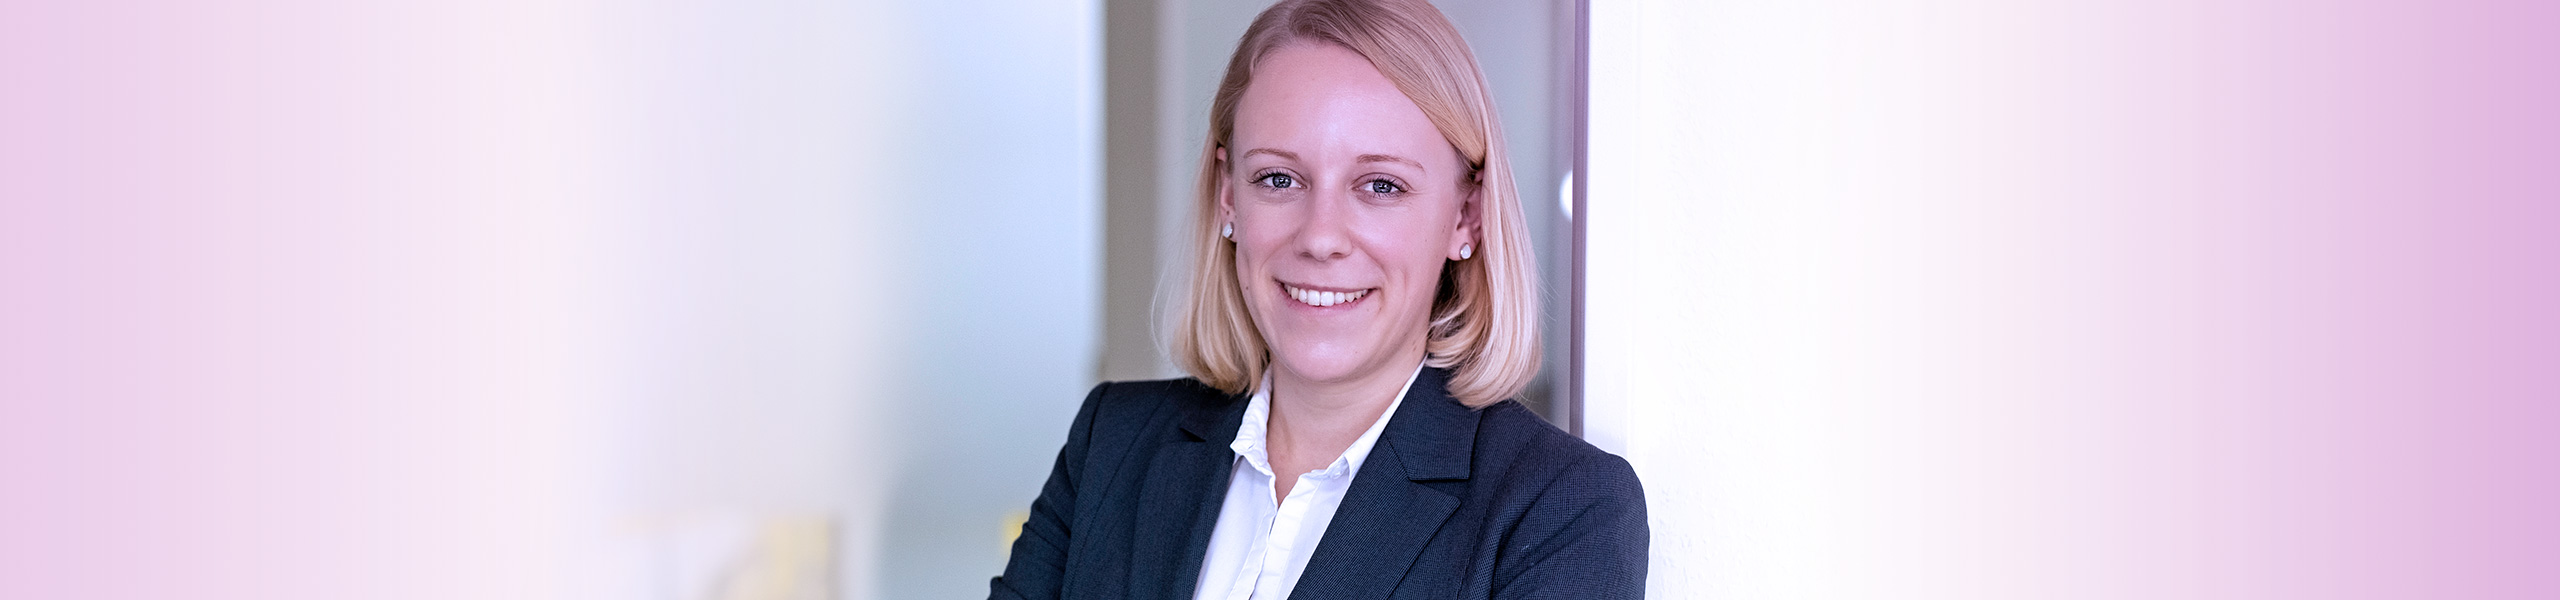 Svenja Riesche ist Senior Beraterin bei REWE Group Inhouse Consulting